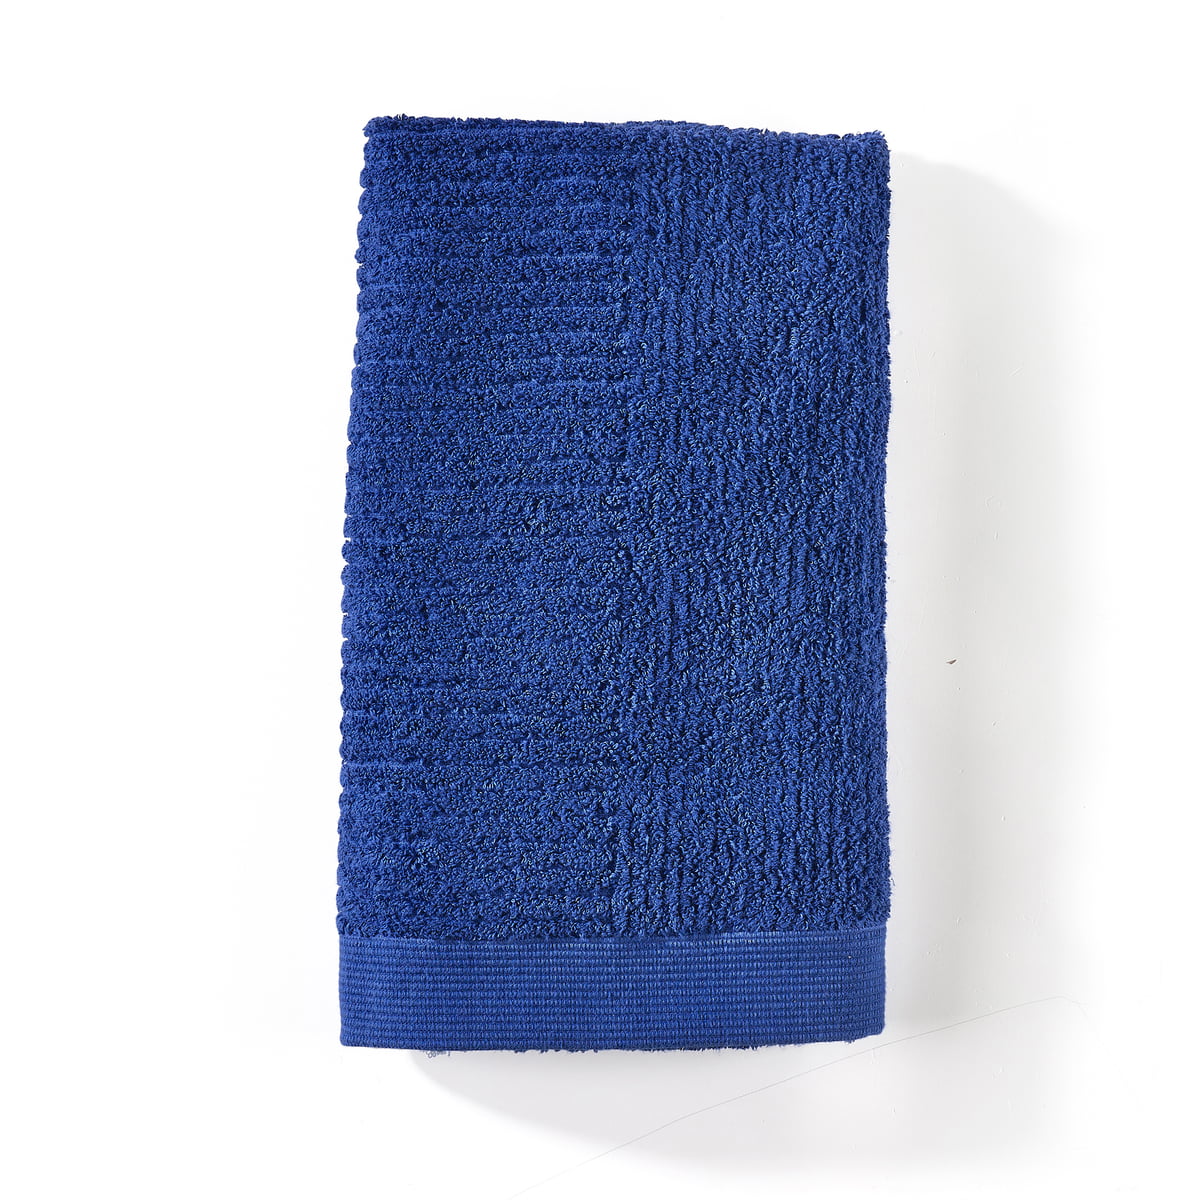 zone denamrk - classic serviette de bain, 50 x 100 cm, indigo blue